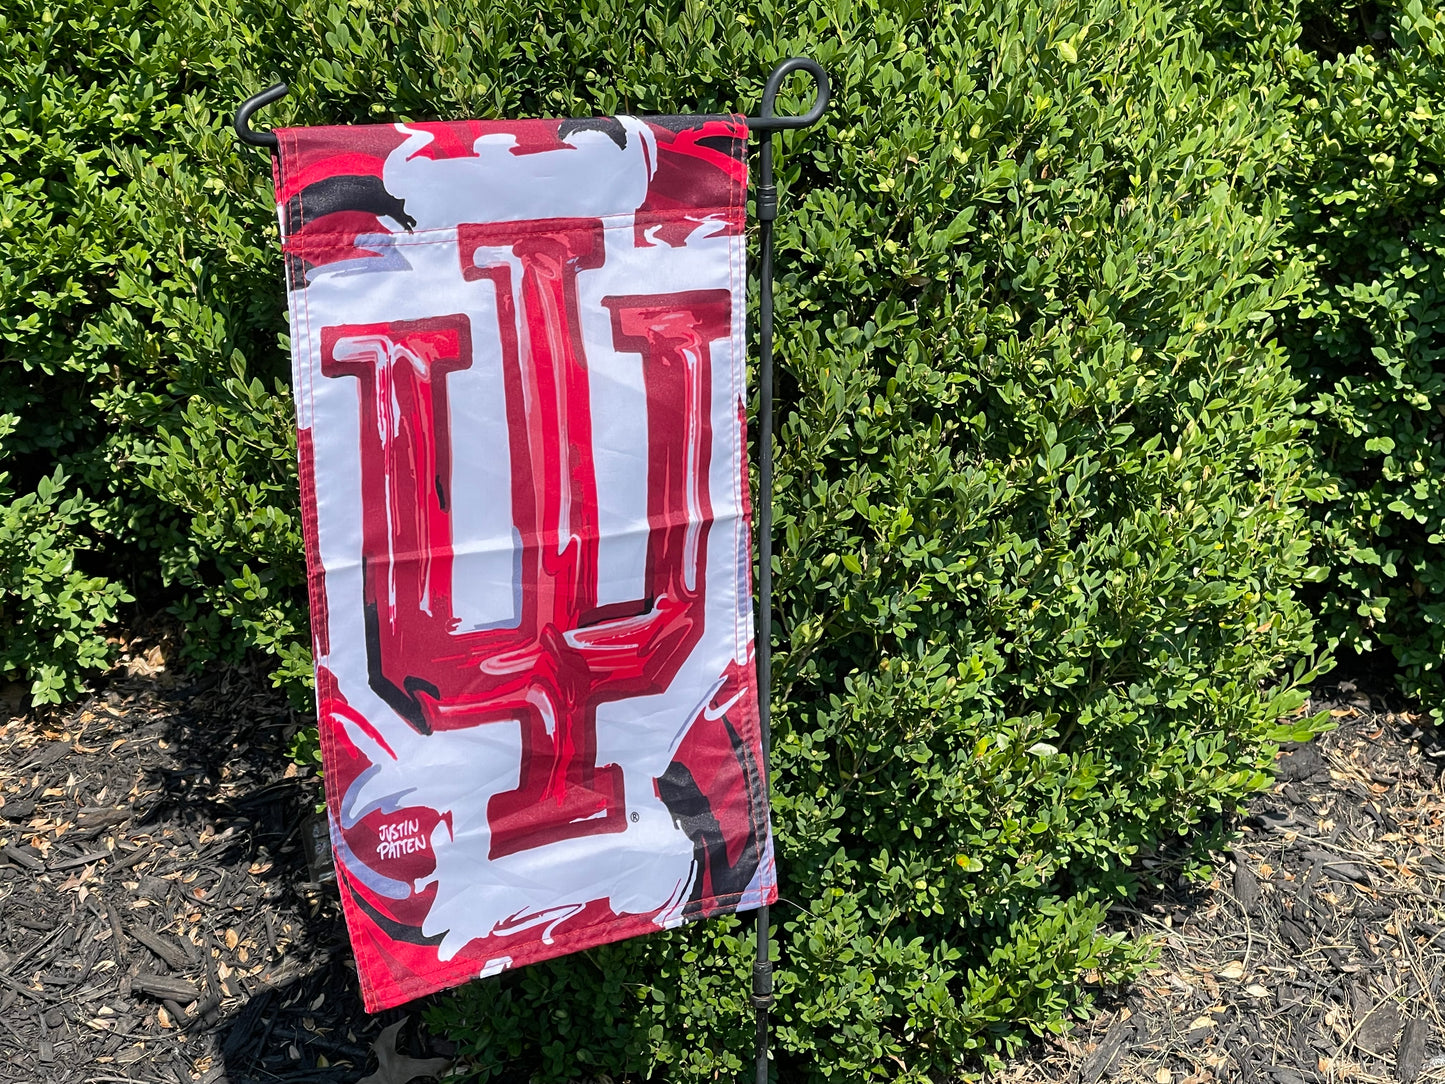 Indiana University IU Garden Flag by Justin Patten